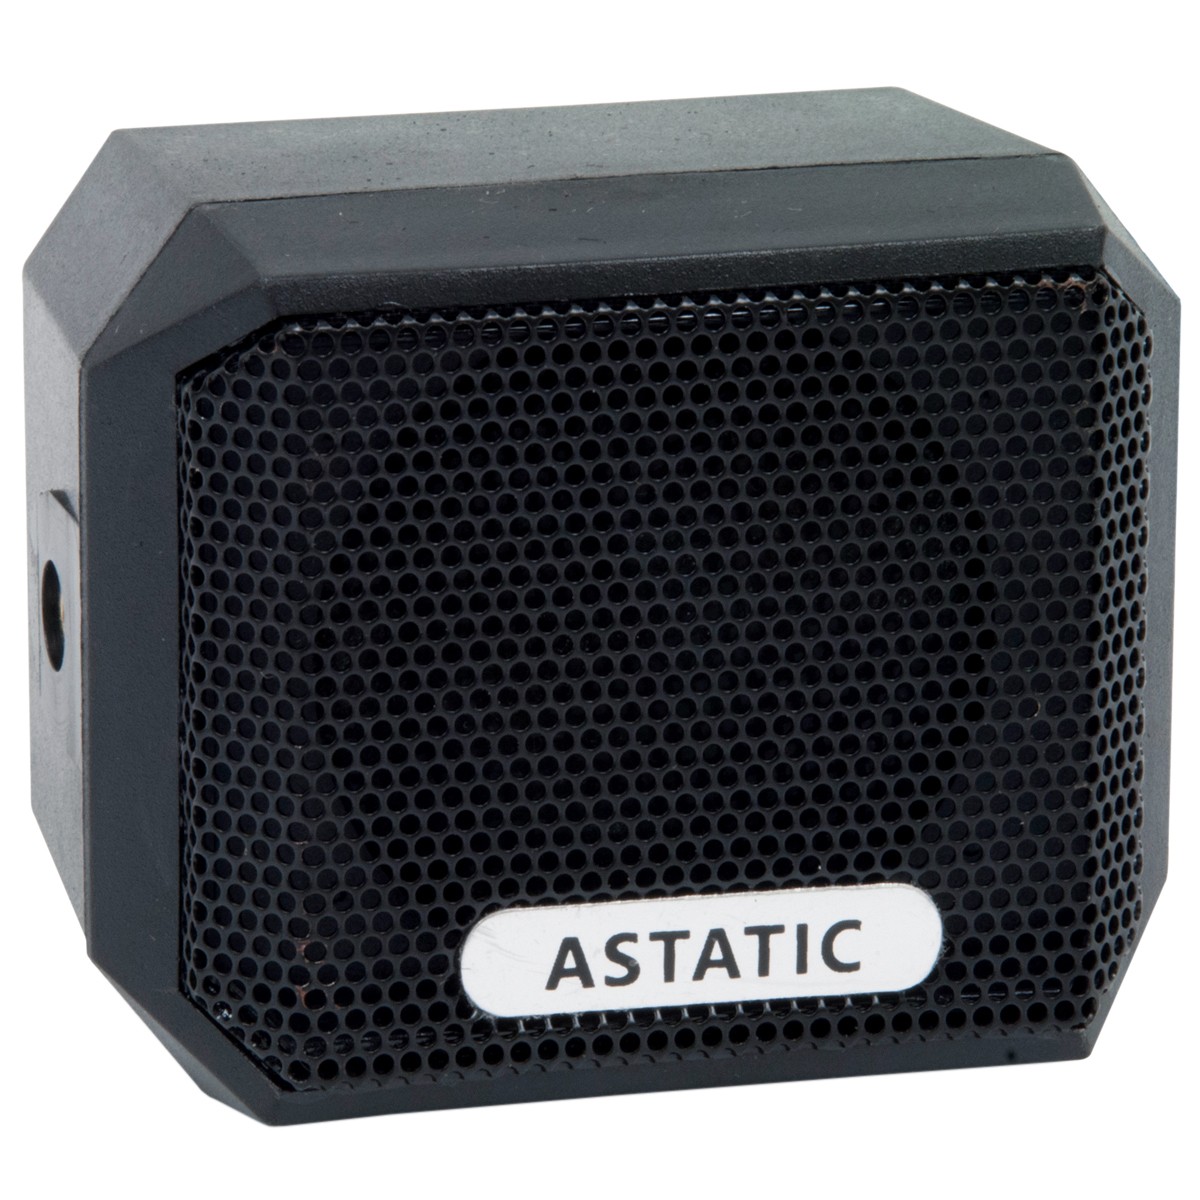 Astatic Cb External Speaker Noise Cancelling 5W/8Ohm